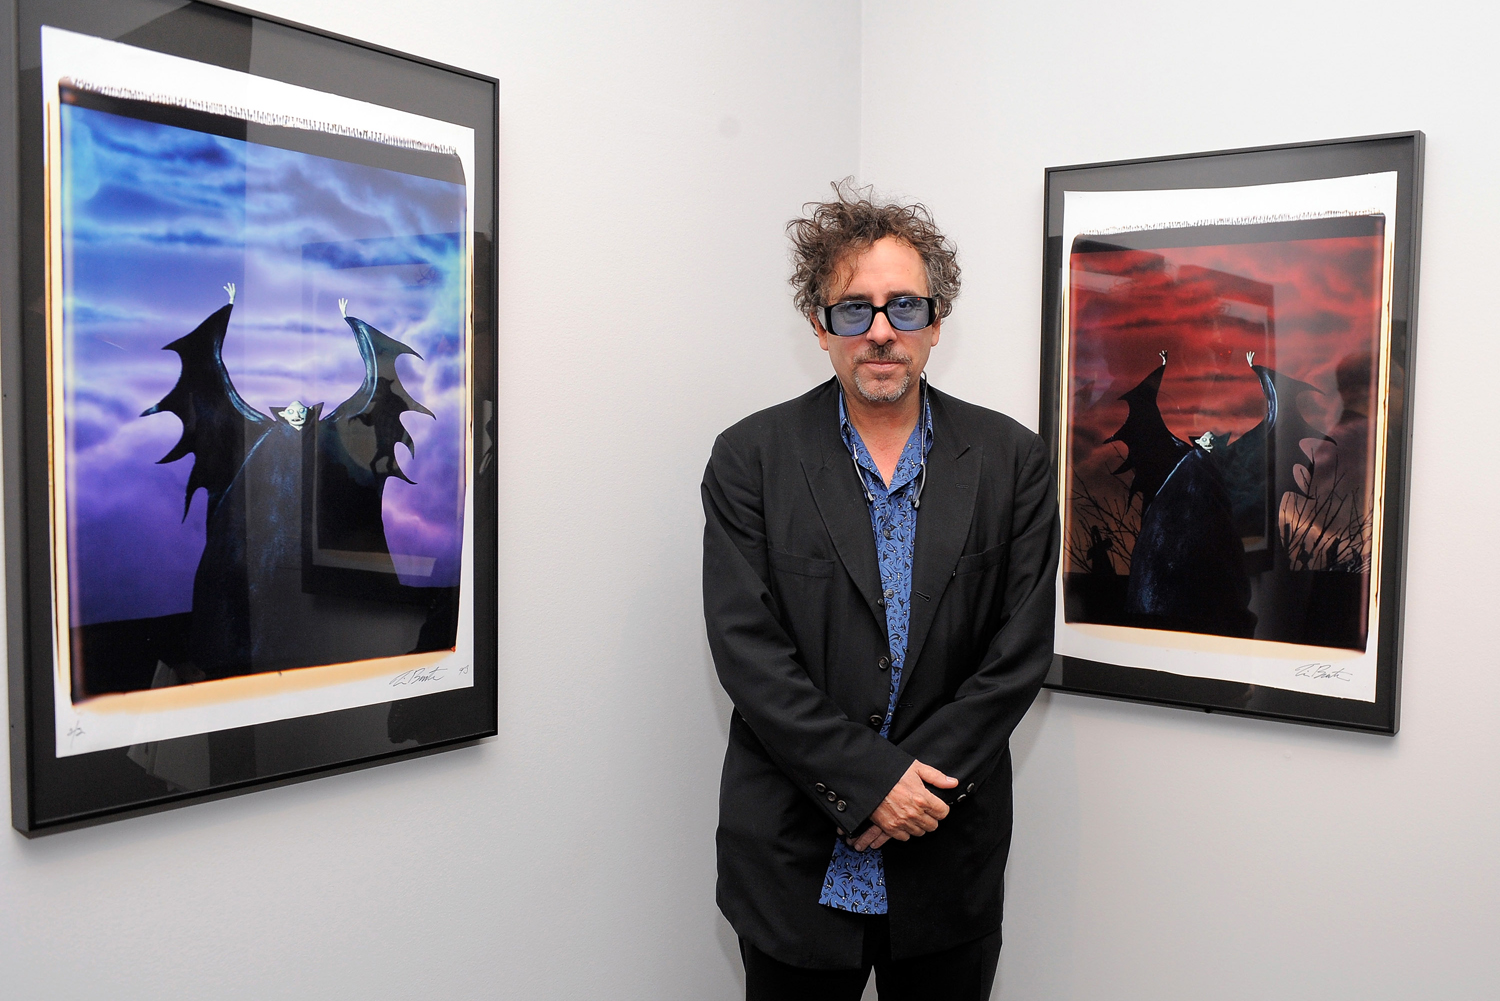 Exhibit covers Tim Burton's career as filmmaker and artist